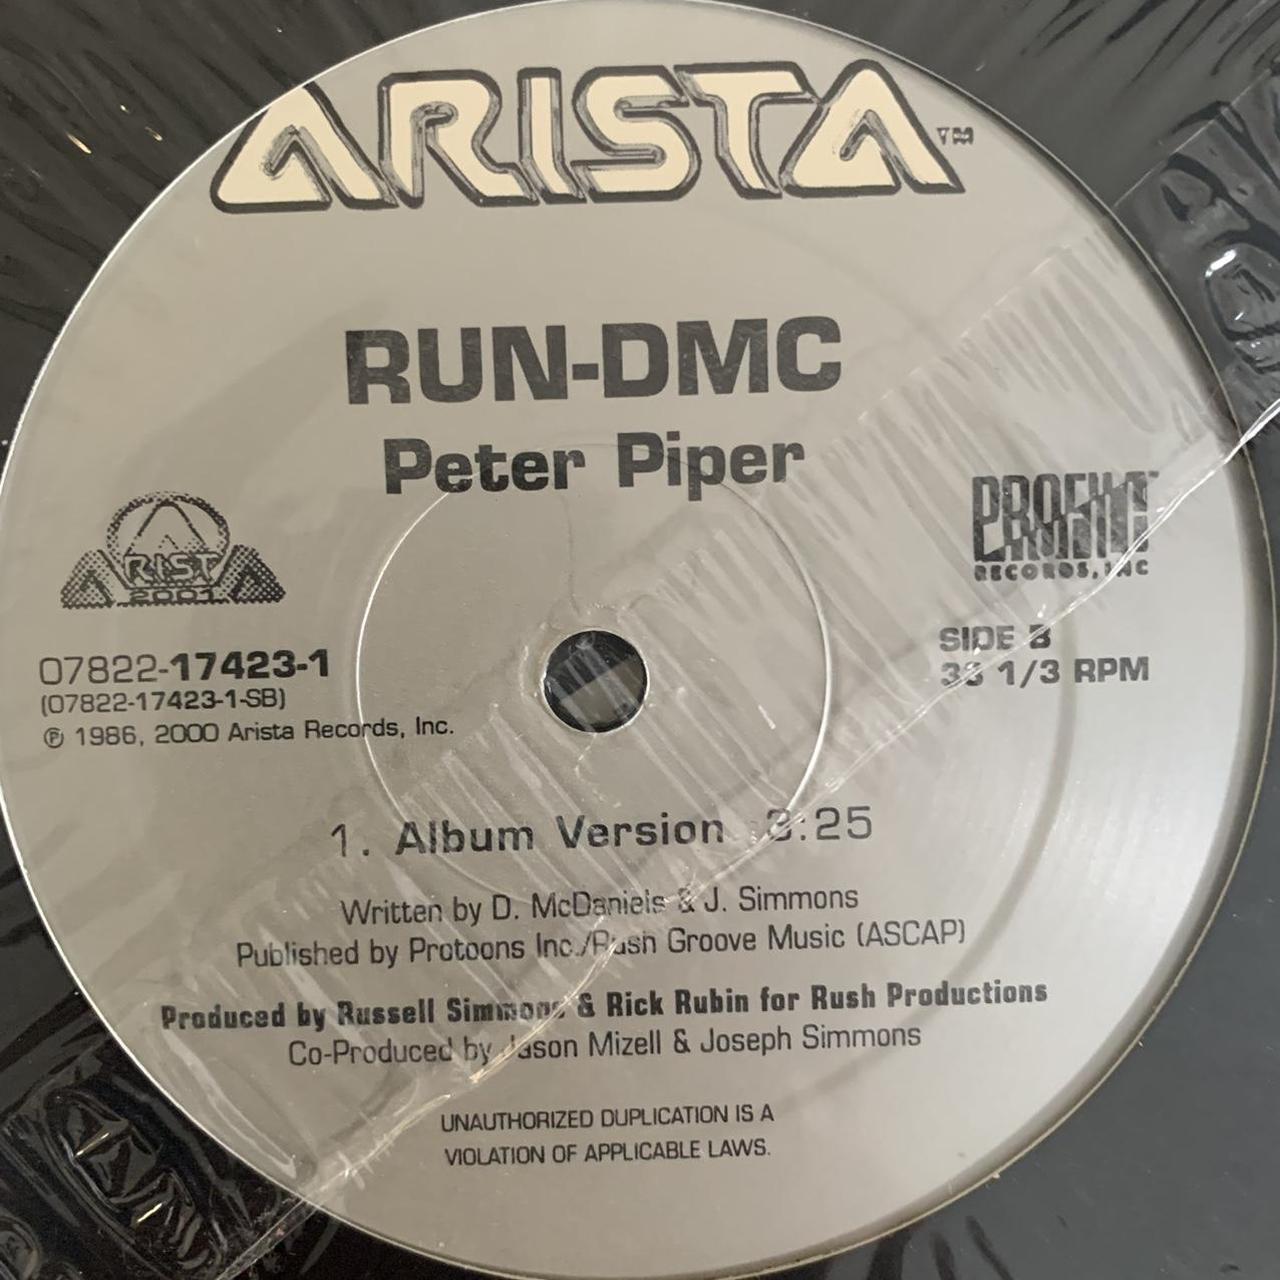 RUN DMC “My Adidas” / “Peter Piper” 3 Track 12inch Vinyl